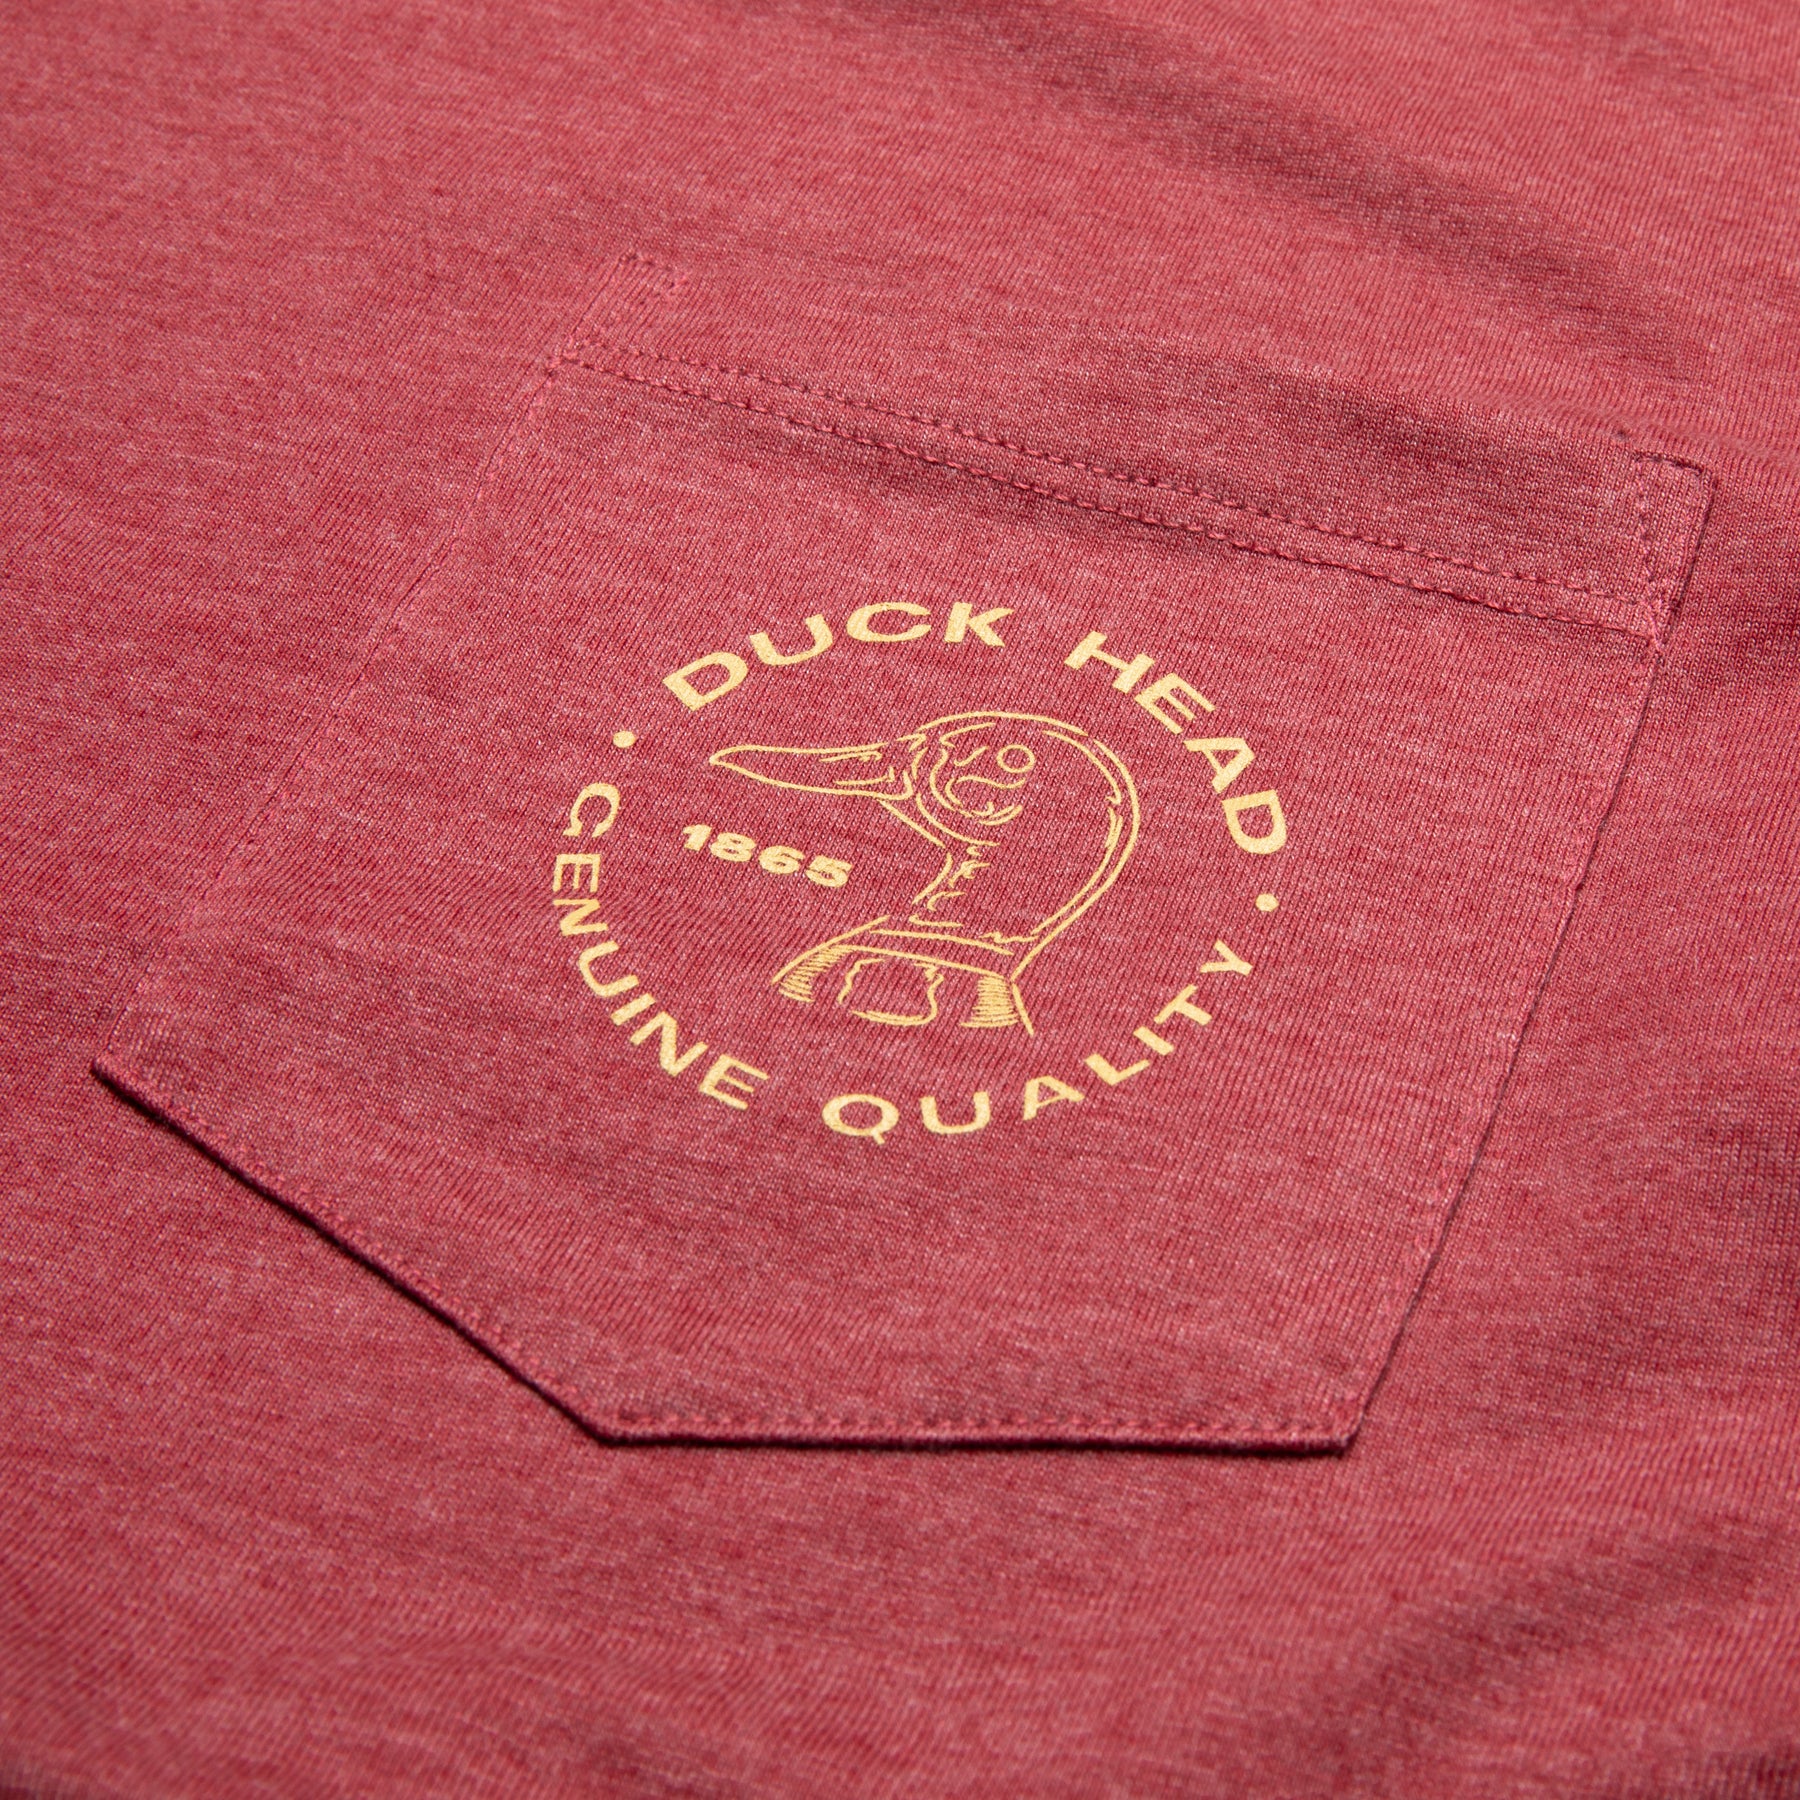 Shirts & Outerwear – Duck Head